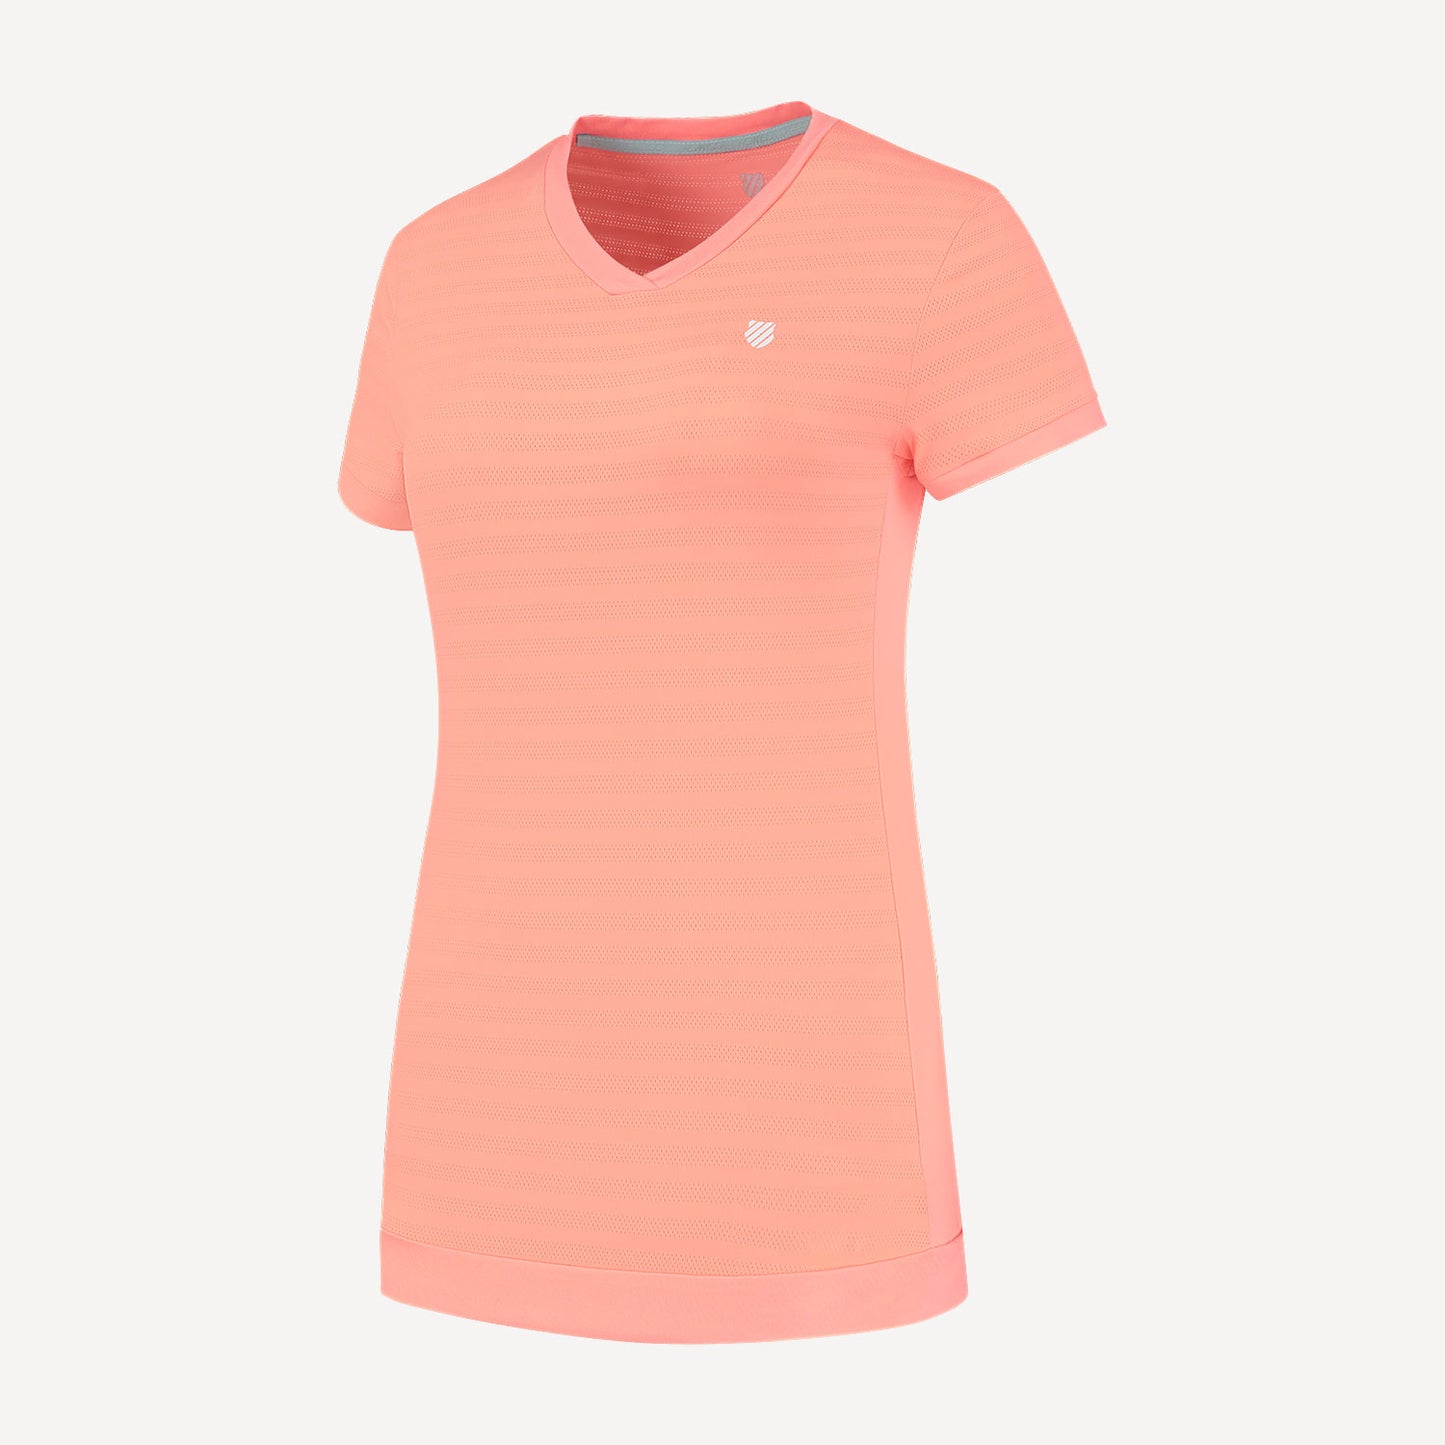 K-Swiss Hypercourt Women's V-Neck Tennis Shirt Orange (1)